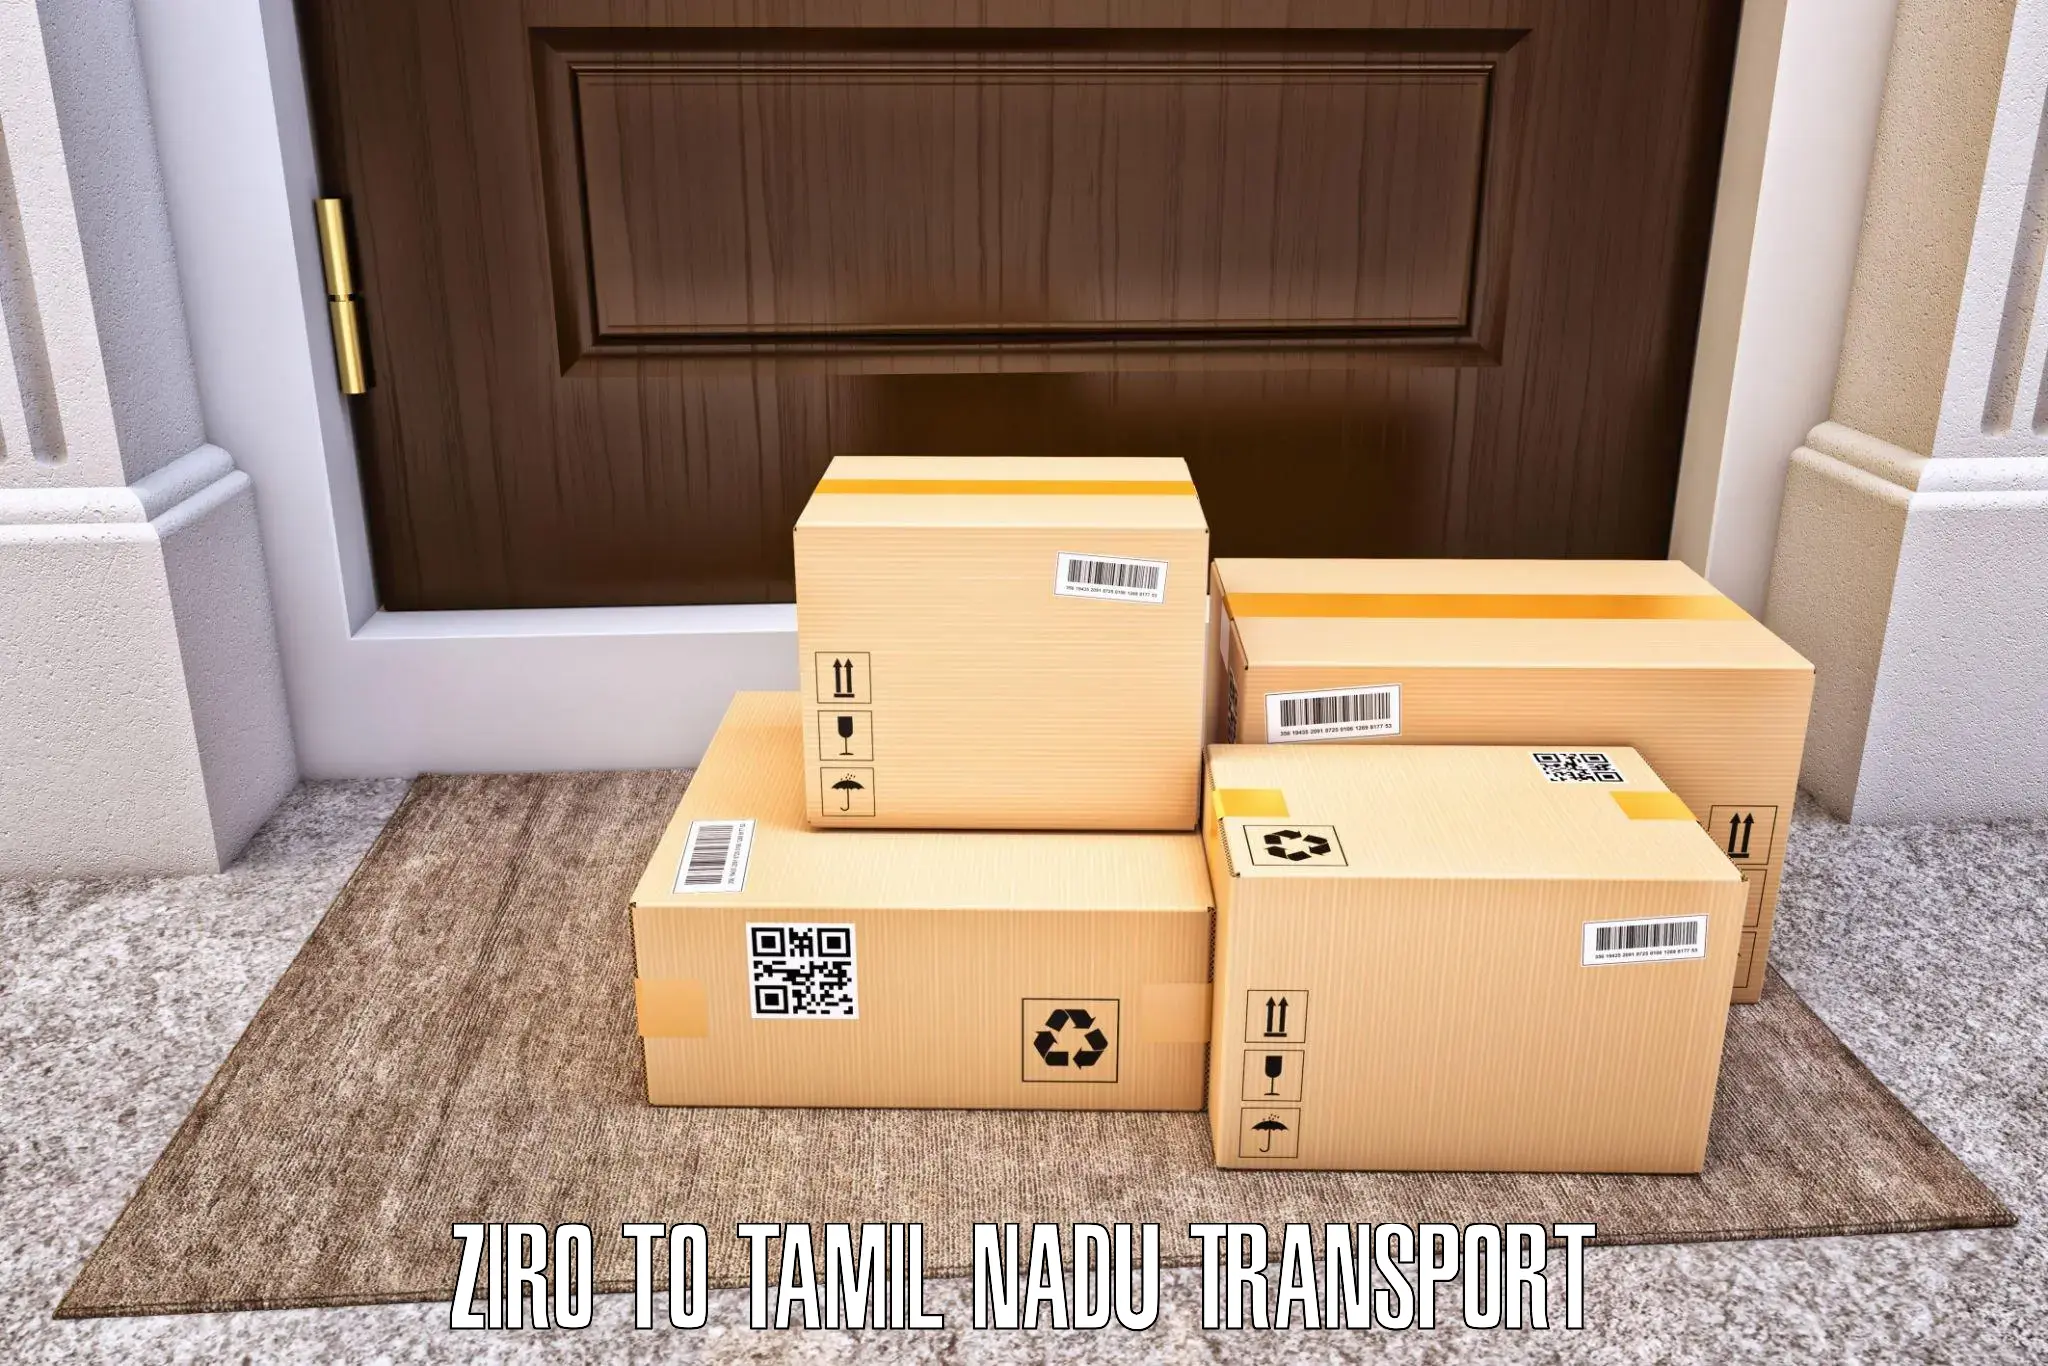 Cargo transport services Ziro to Tamil Nadu